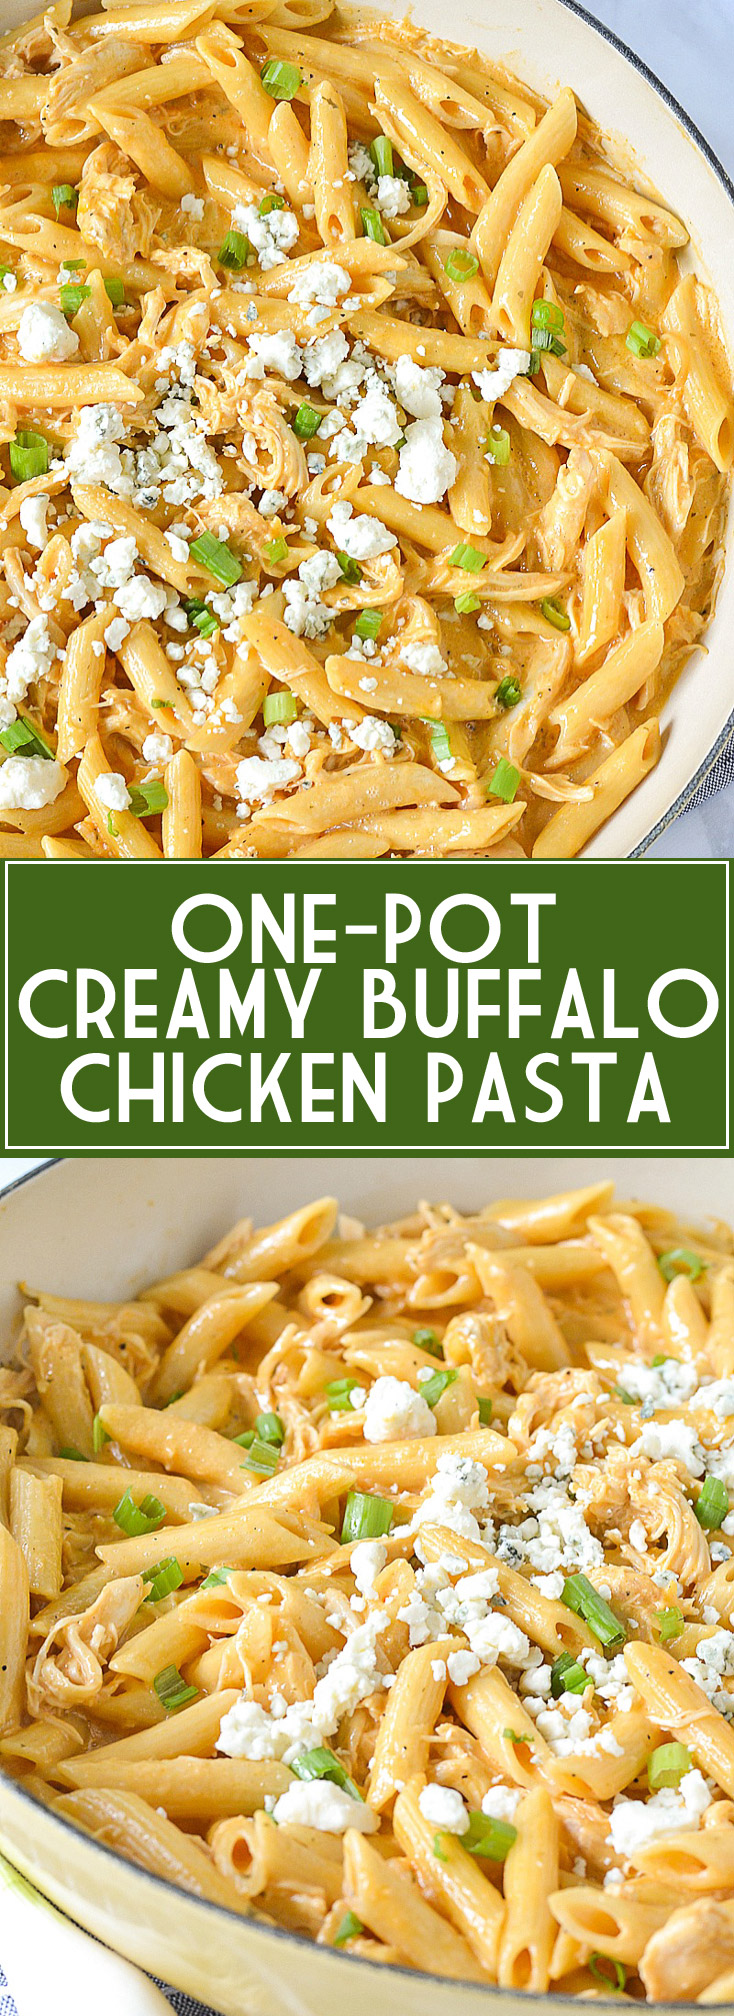 One-Pot Creamy Buffalo Chicken Pasta | www.motherthyme.com